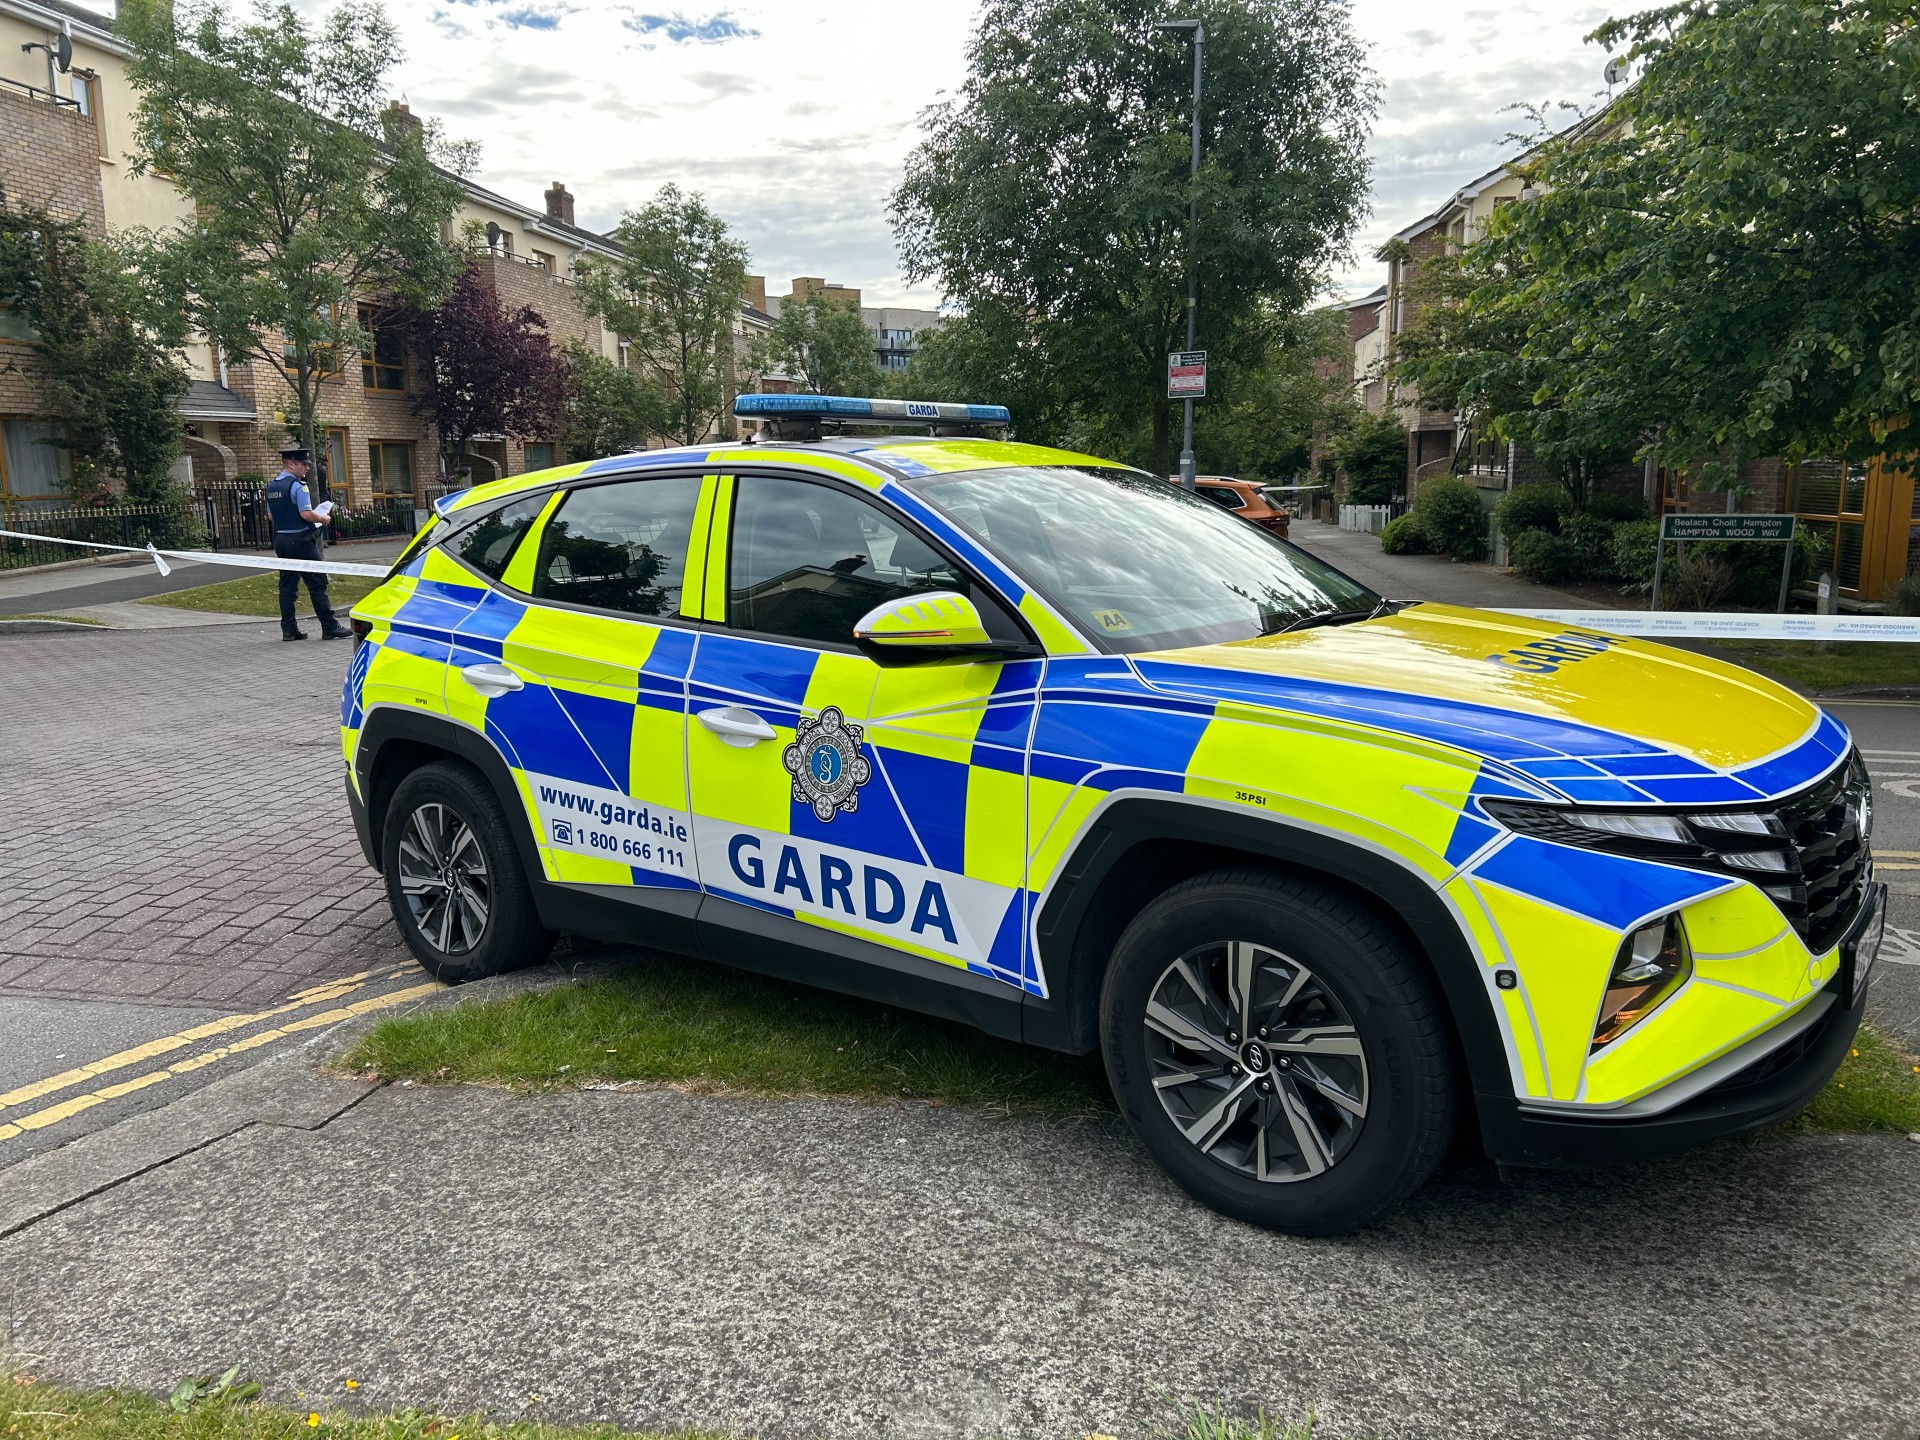 Gardaí at the scene near St Margaret’s Road in Finglas